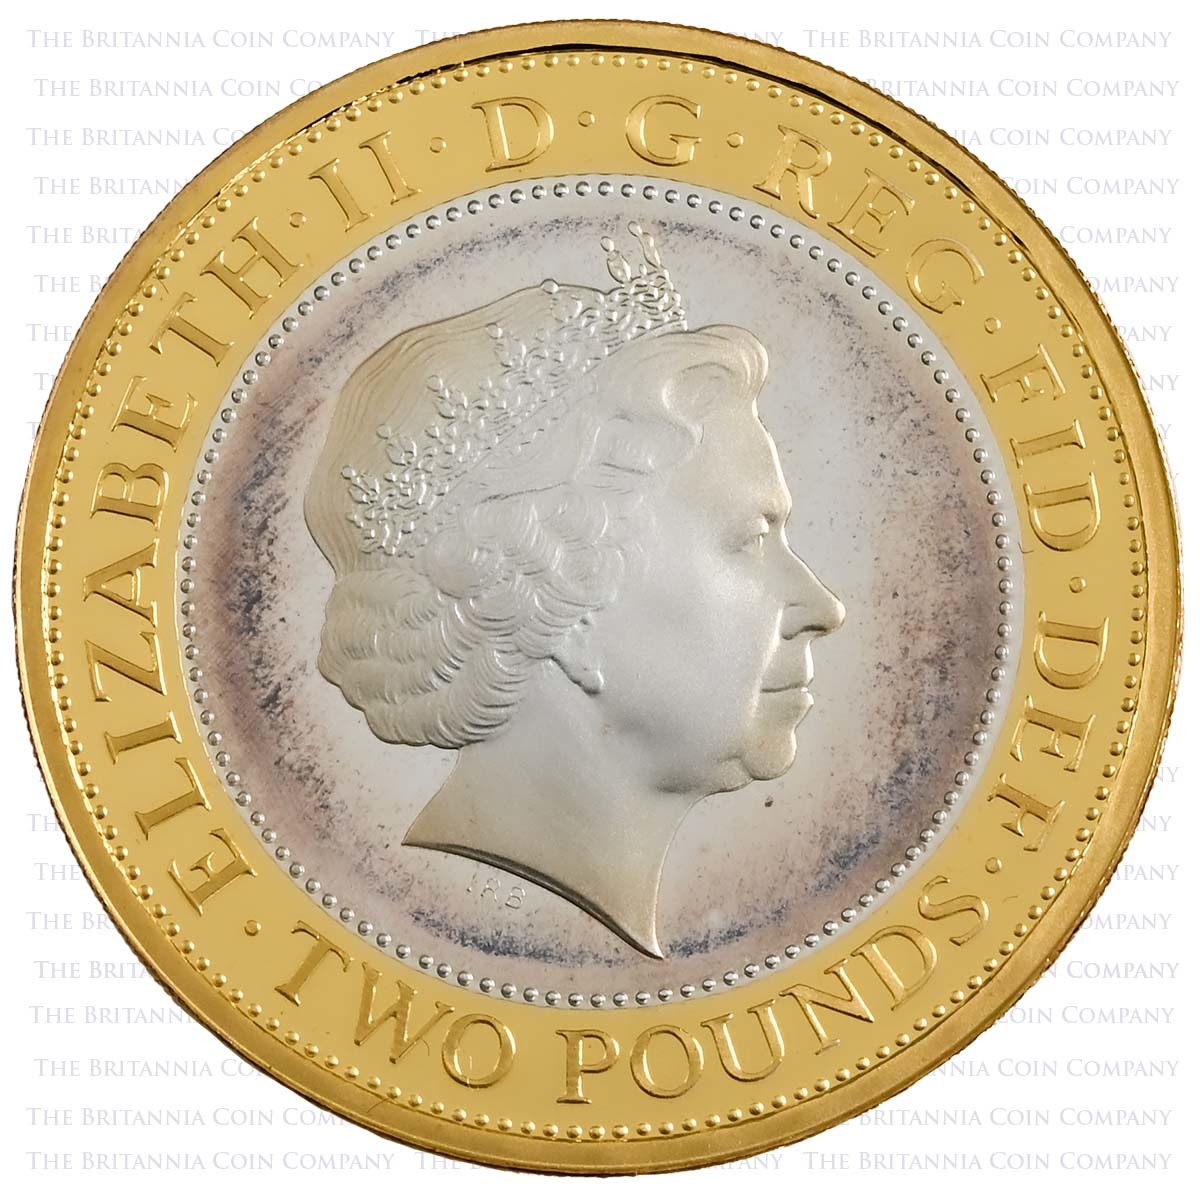 UK13GUSP 2013 Golden Guinea £2 Silver Proof Obverse